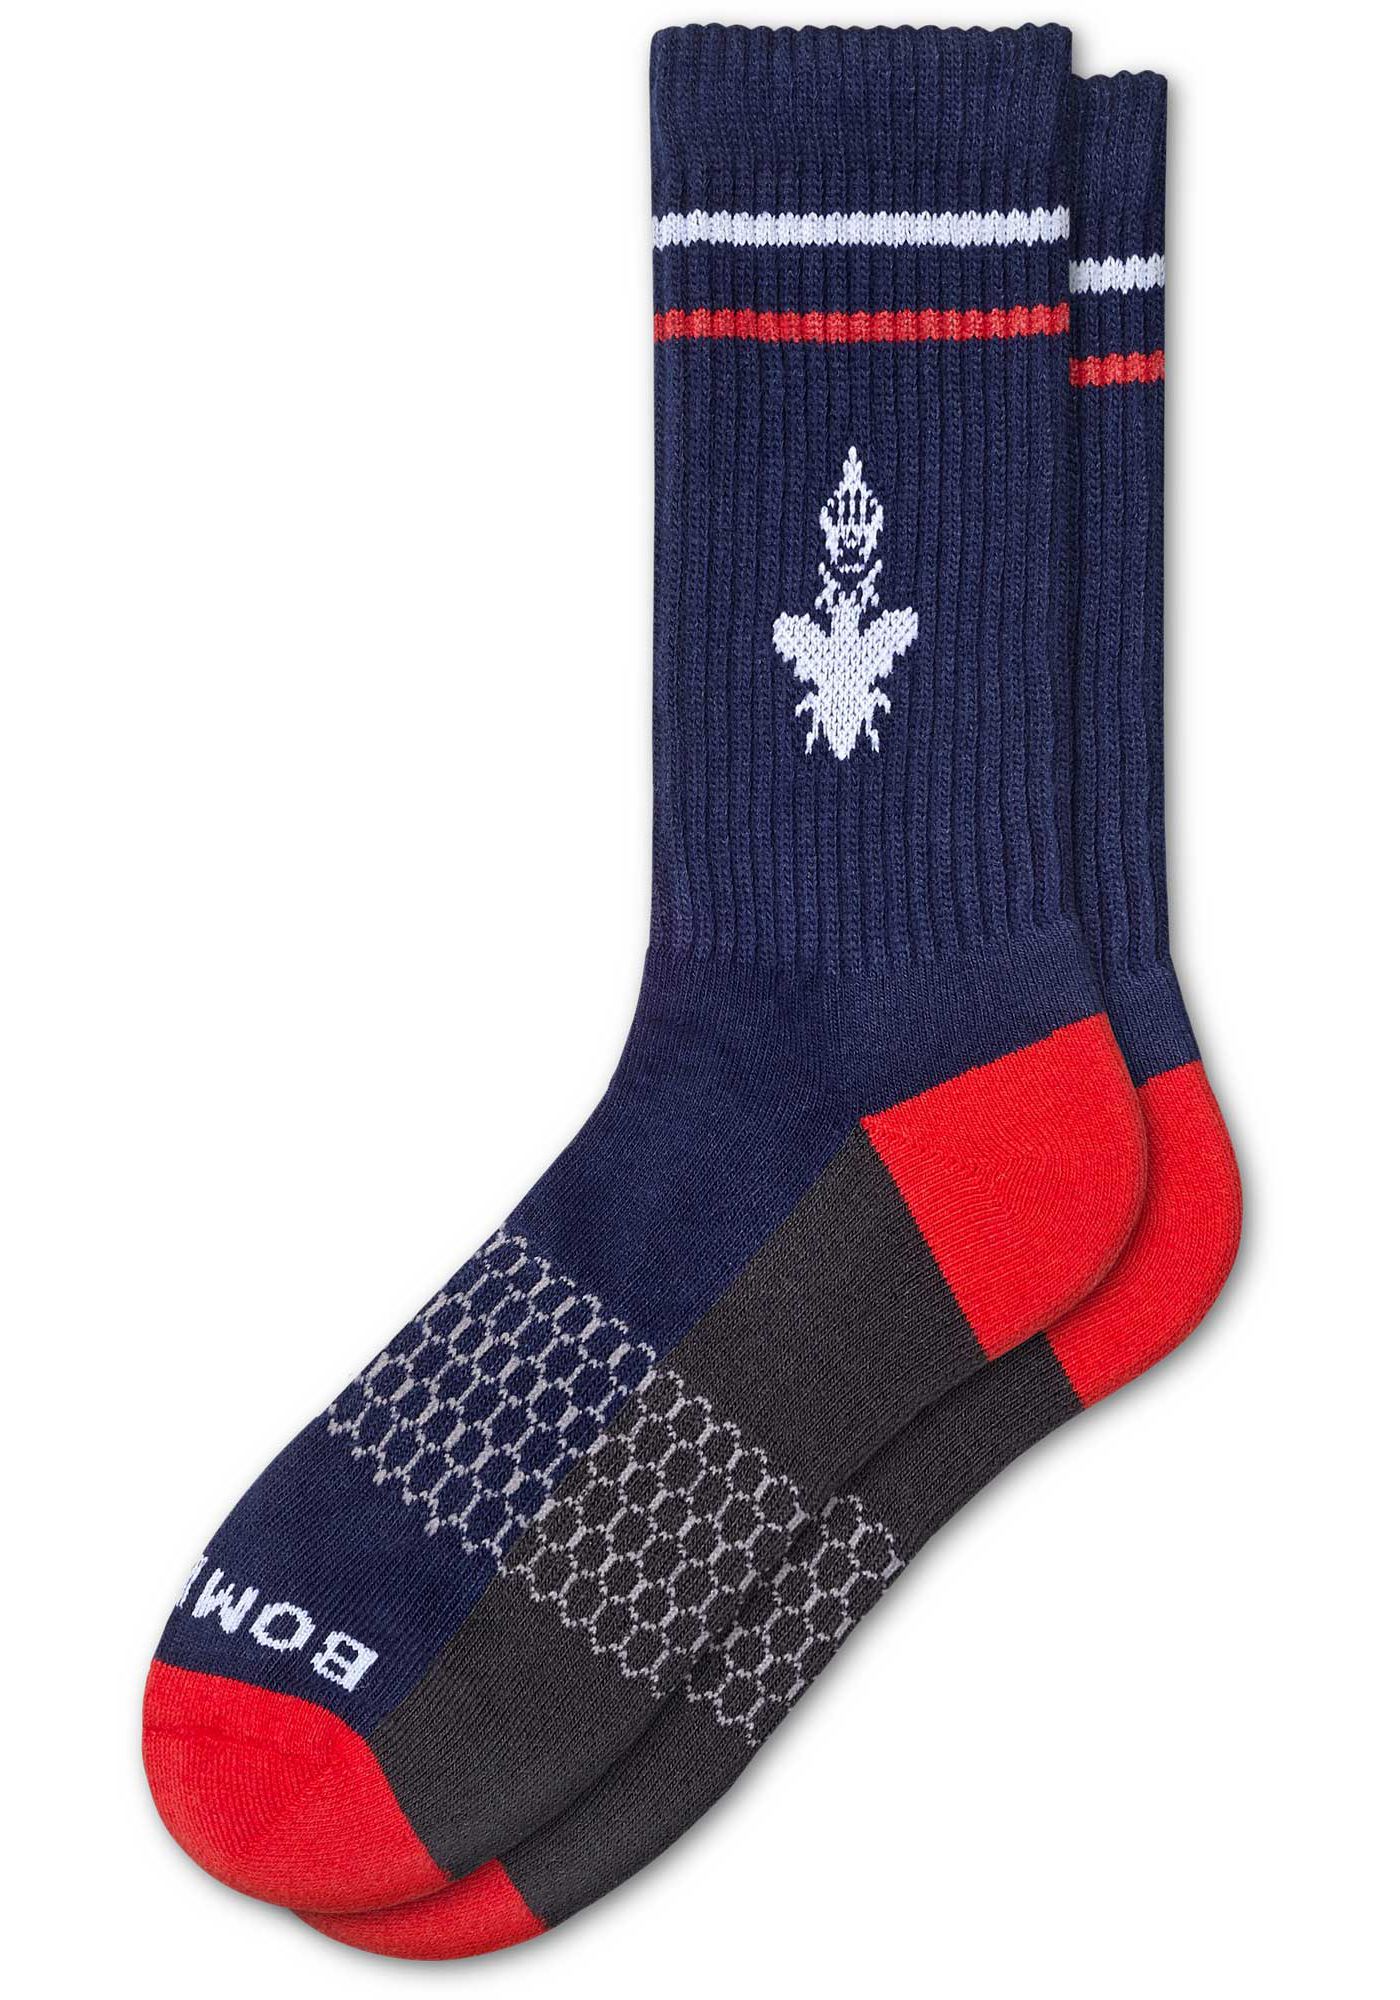 Bombas Men's Originals Calf Socks | DICK'S Sporting Goods